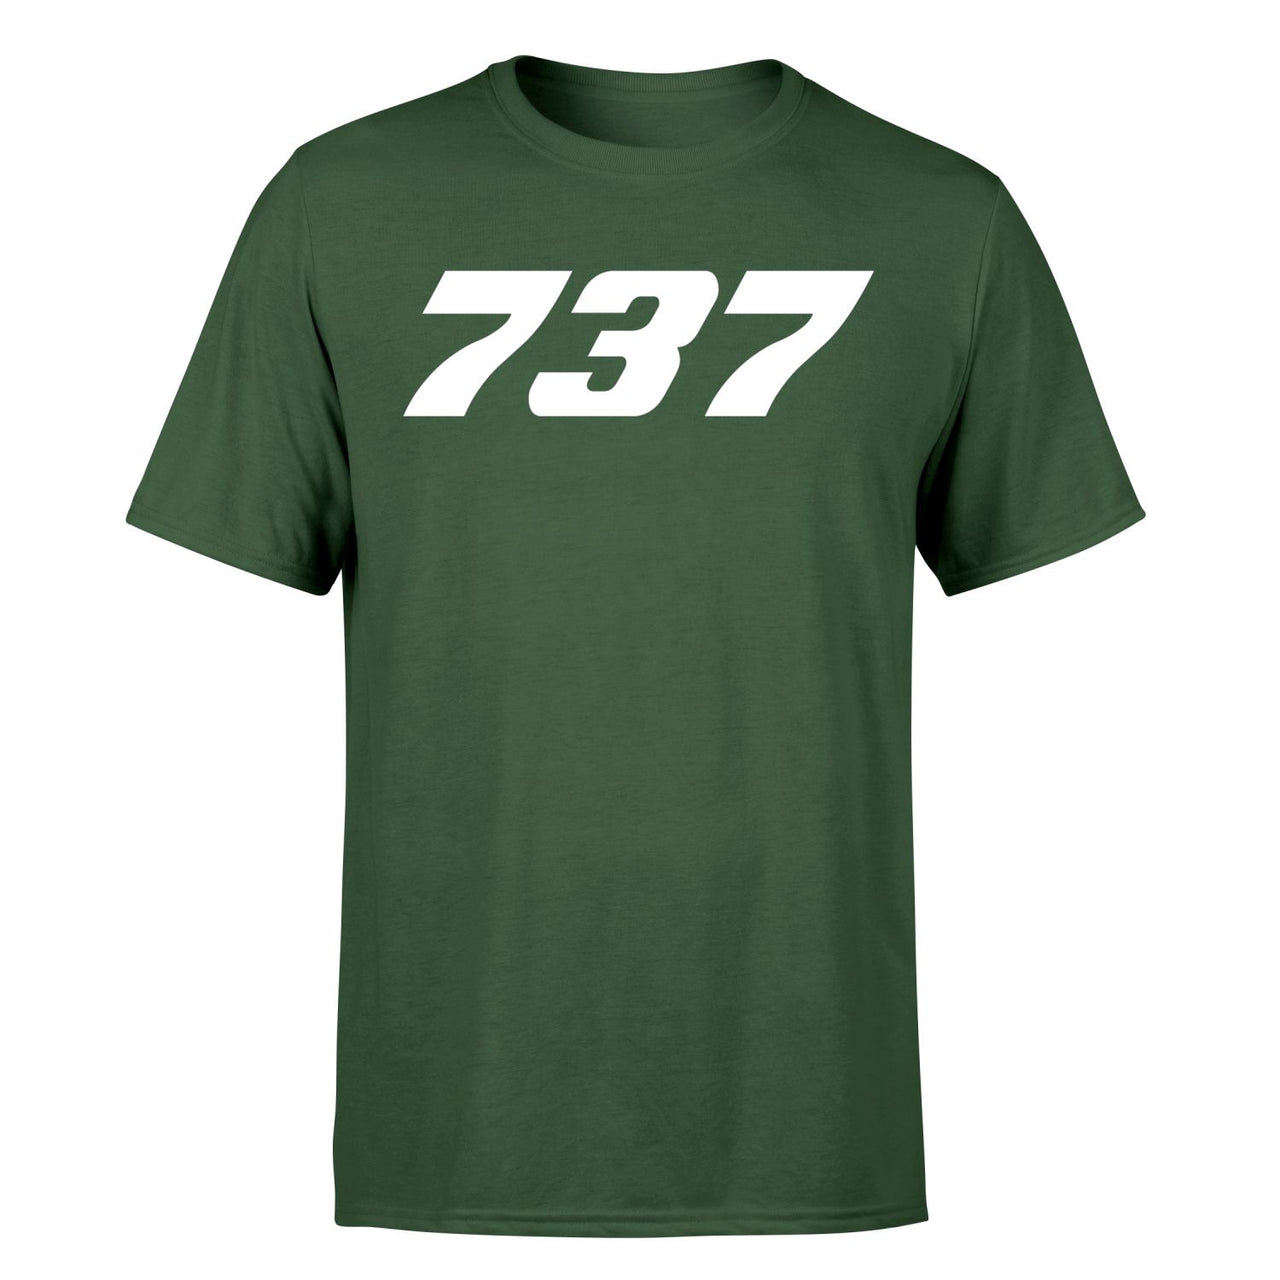 737 Flat Text Designed T-Shirts